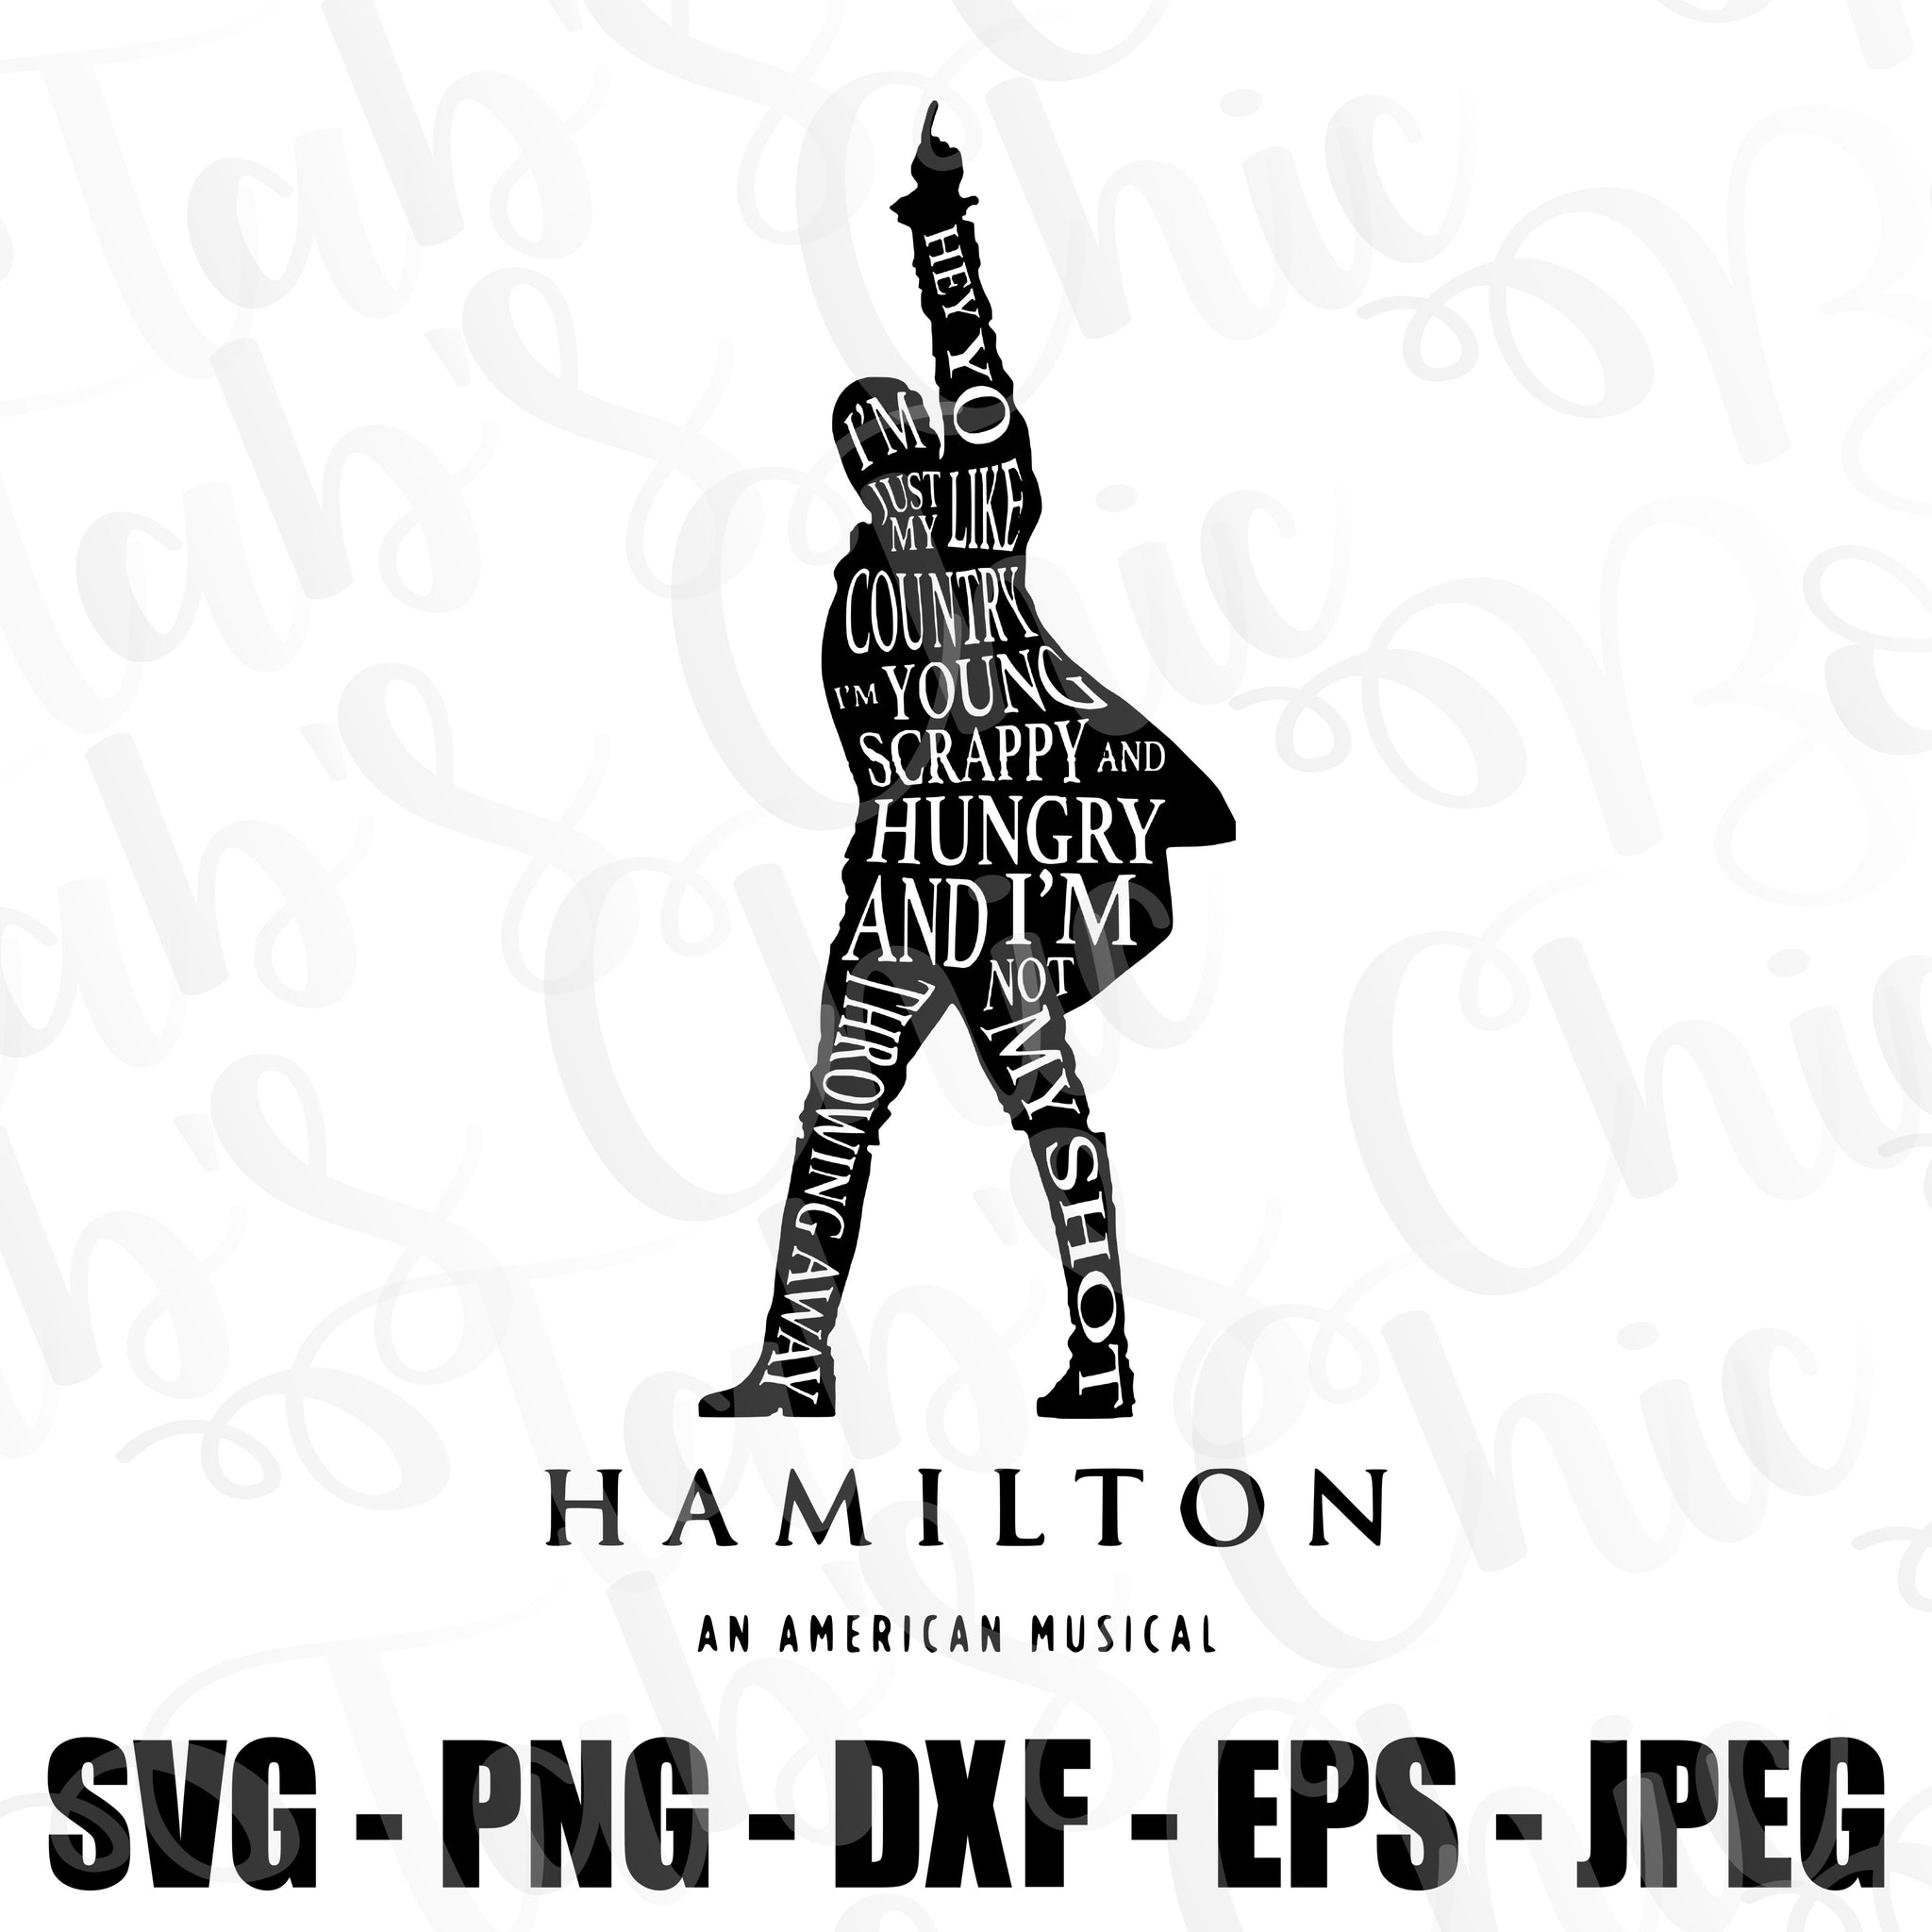 Download Hamilton Broadway Musical SVG EPS DXF PNG JPEG 300dpi ...